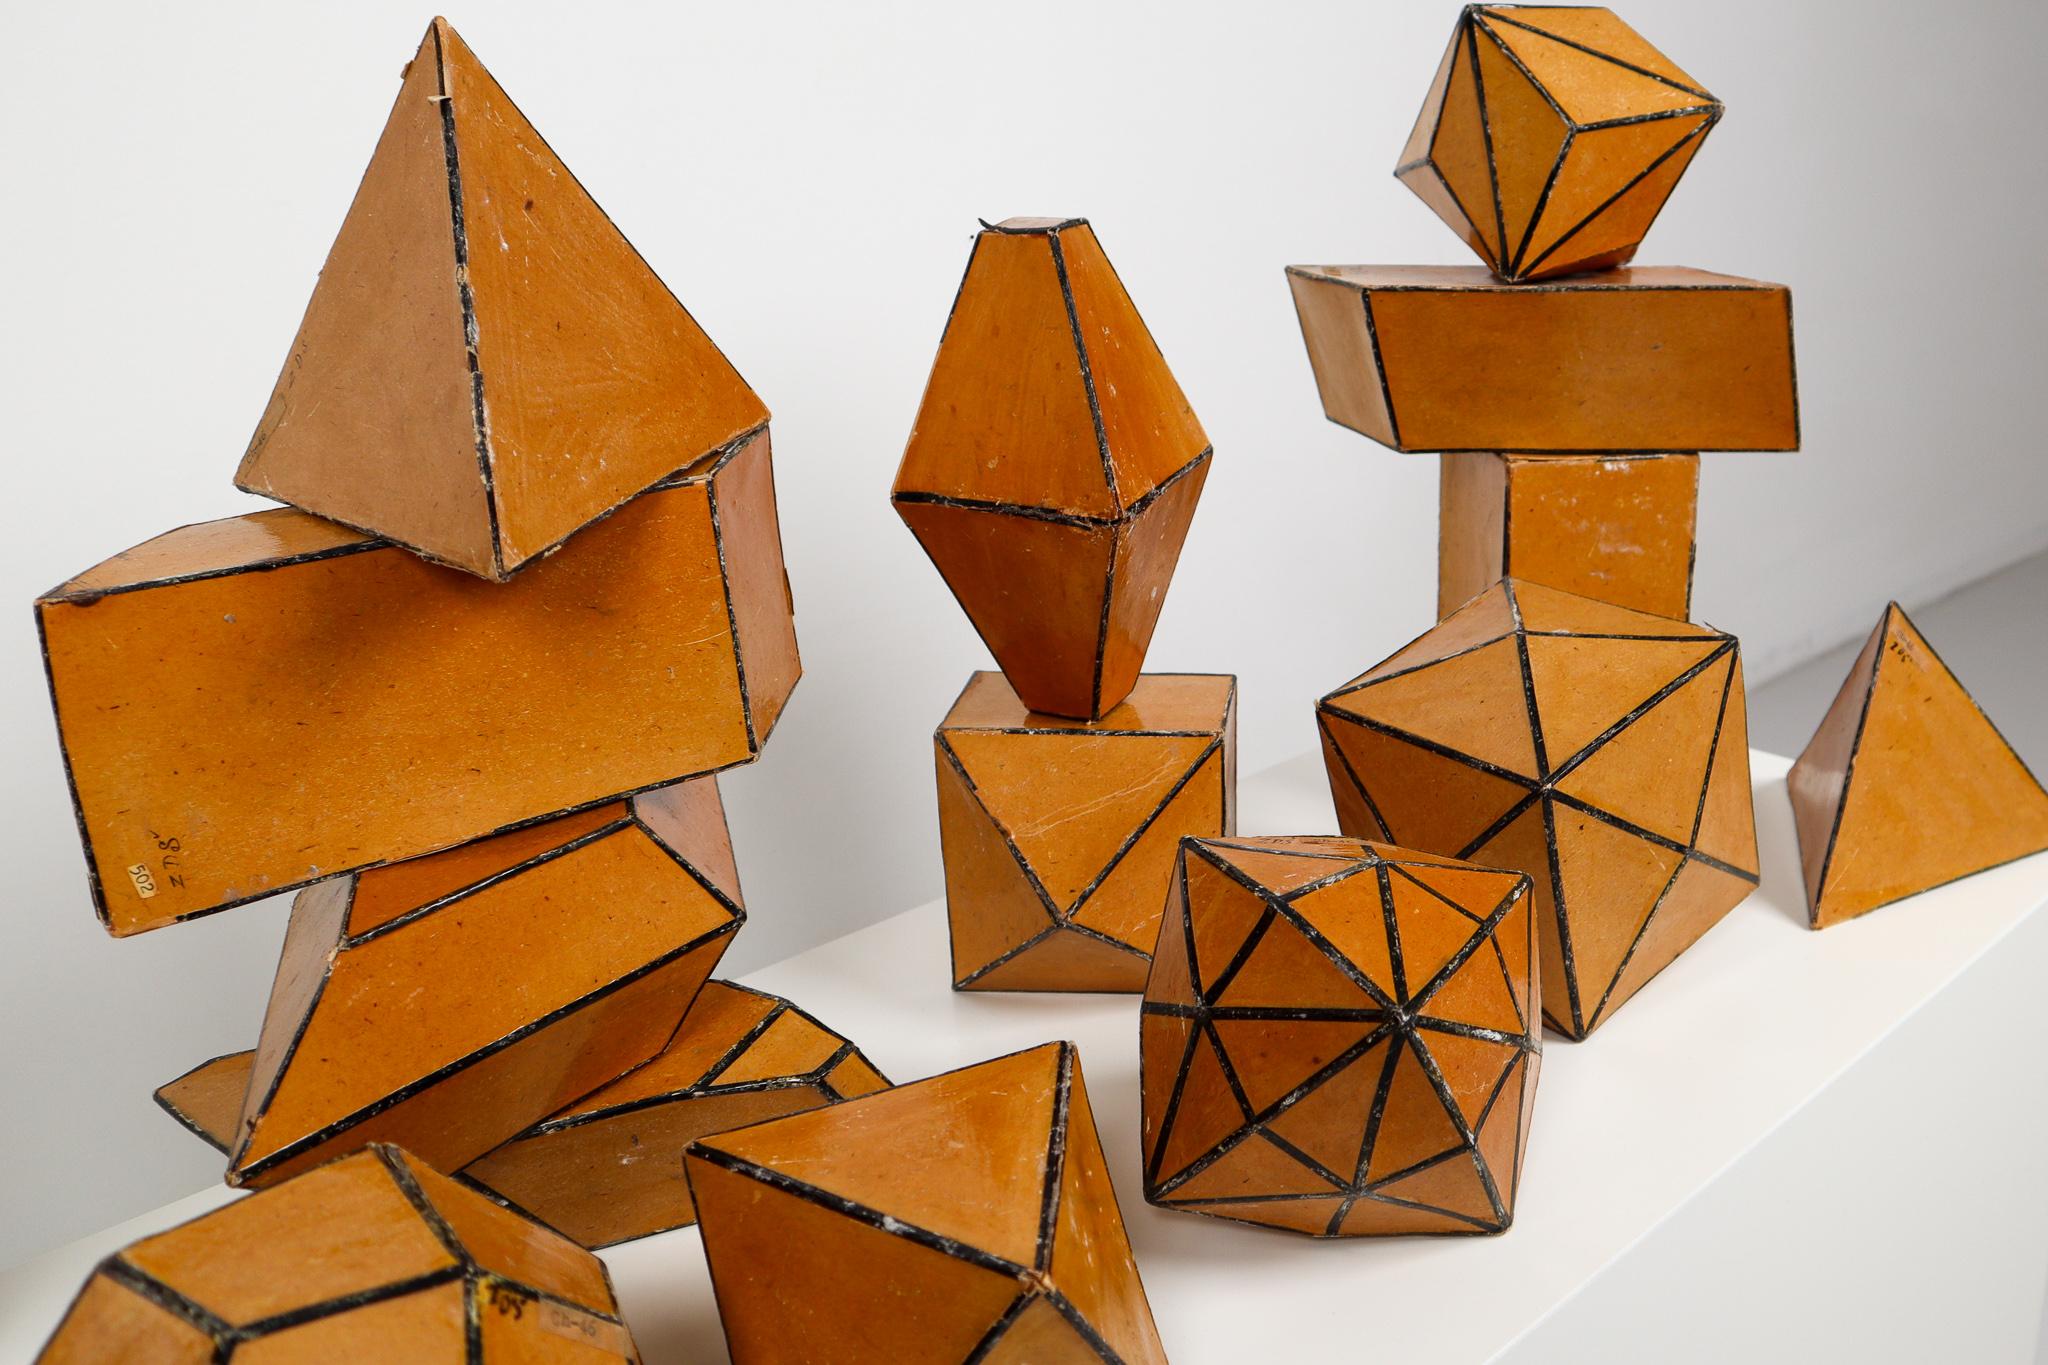 Bauhaus Set of 24 Geometric Science Cardboard Classroom Crystal Models Praque, 1920